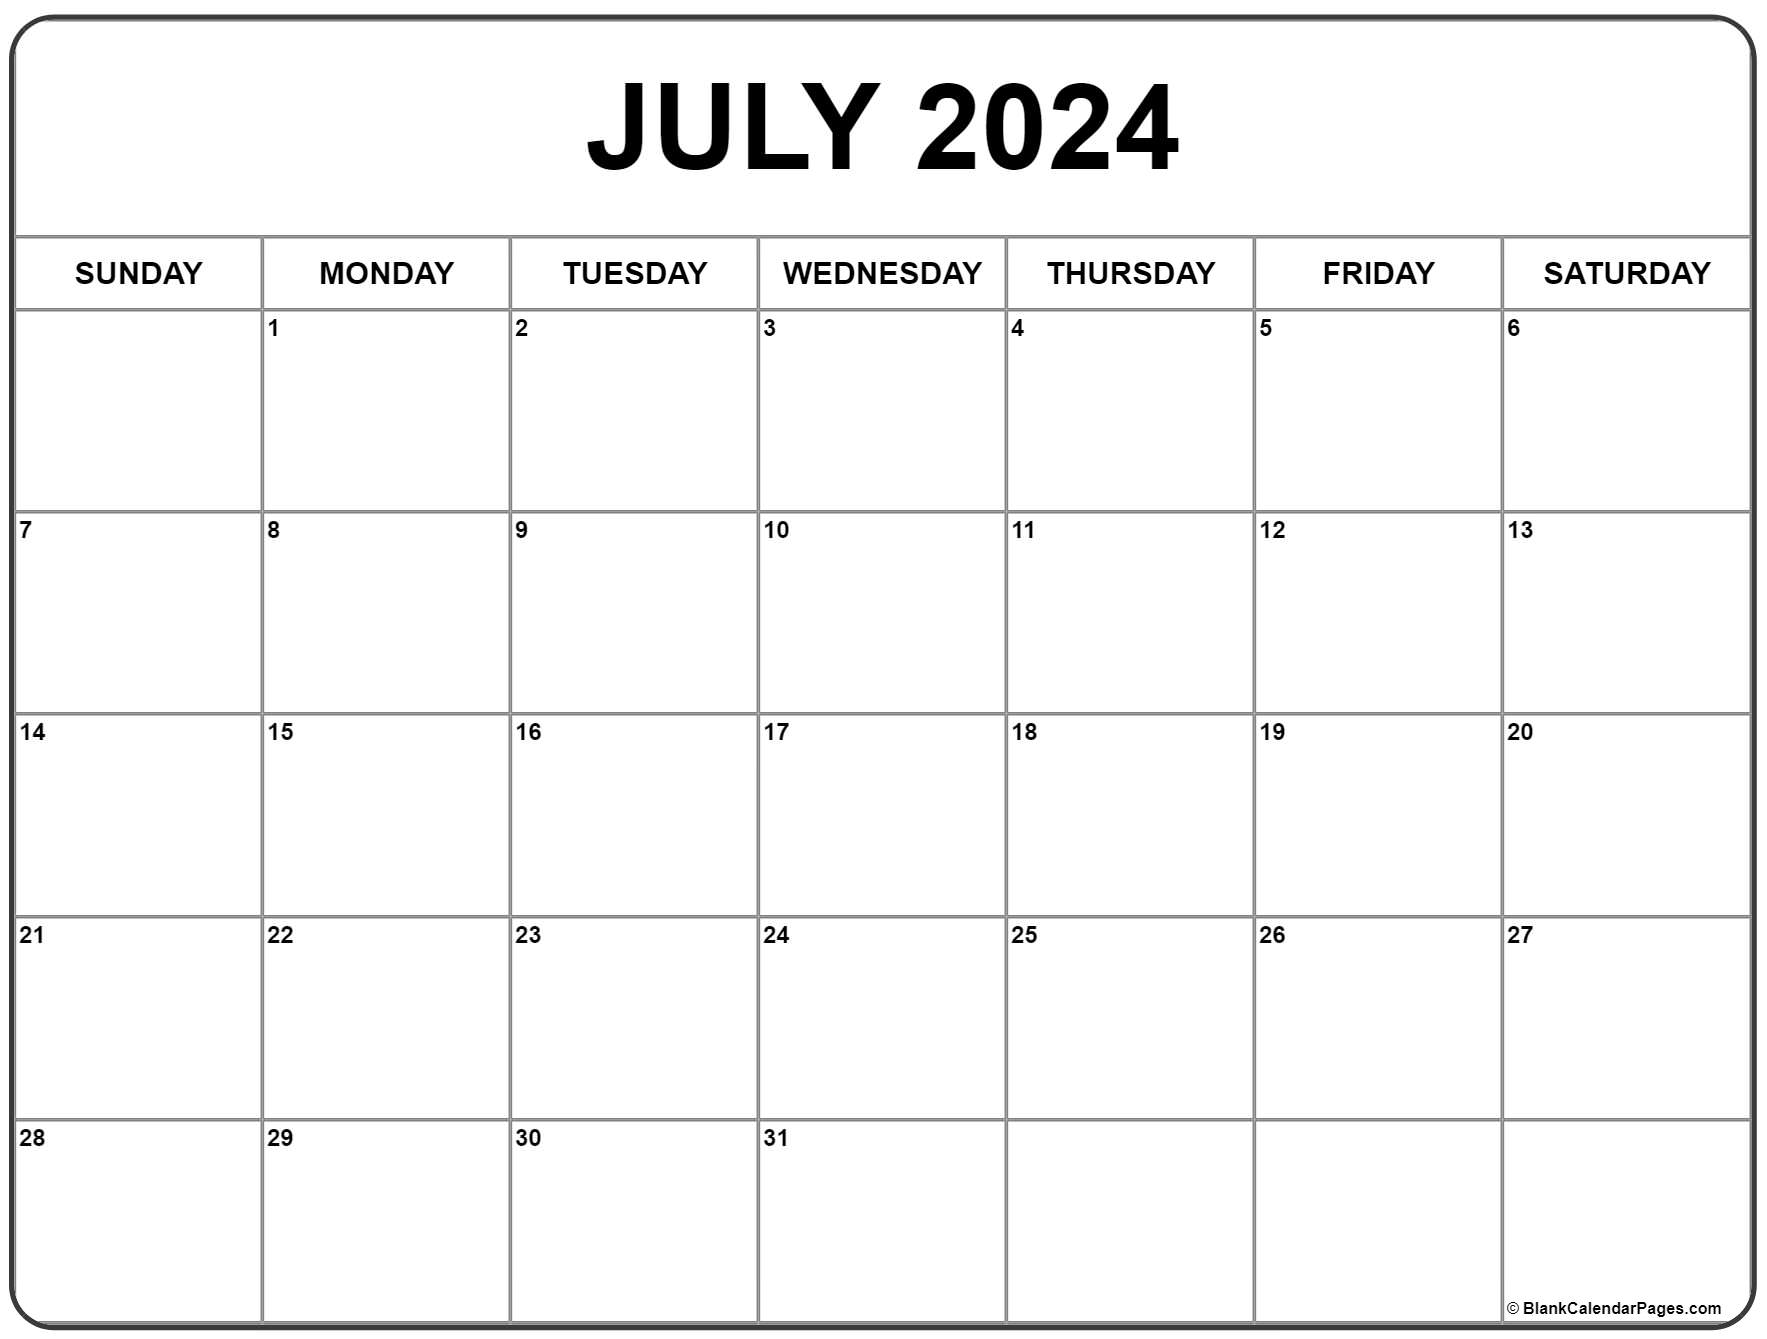 Free Printable Calendar July 2023 Wiki Printable Templates Free